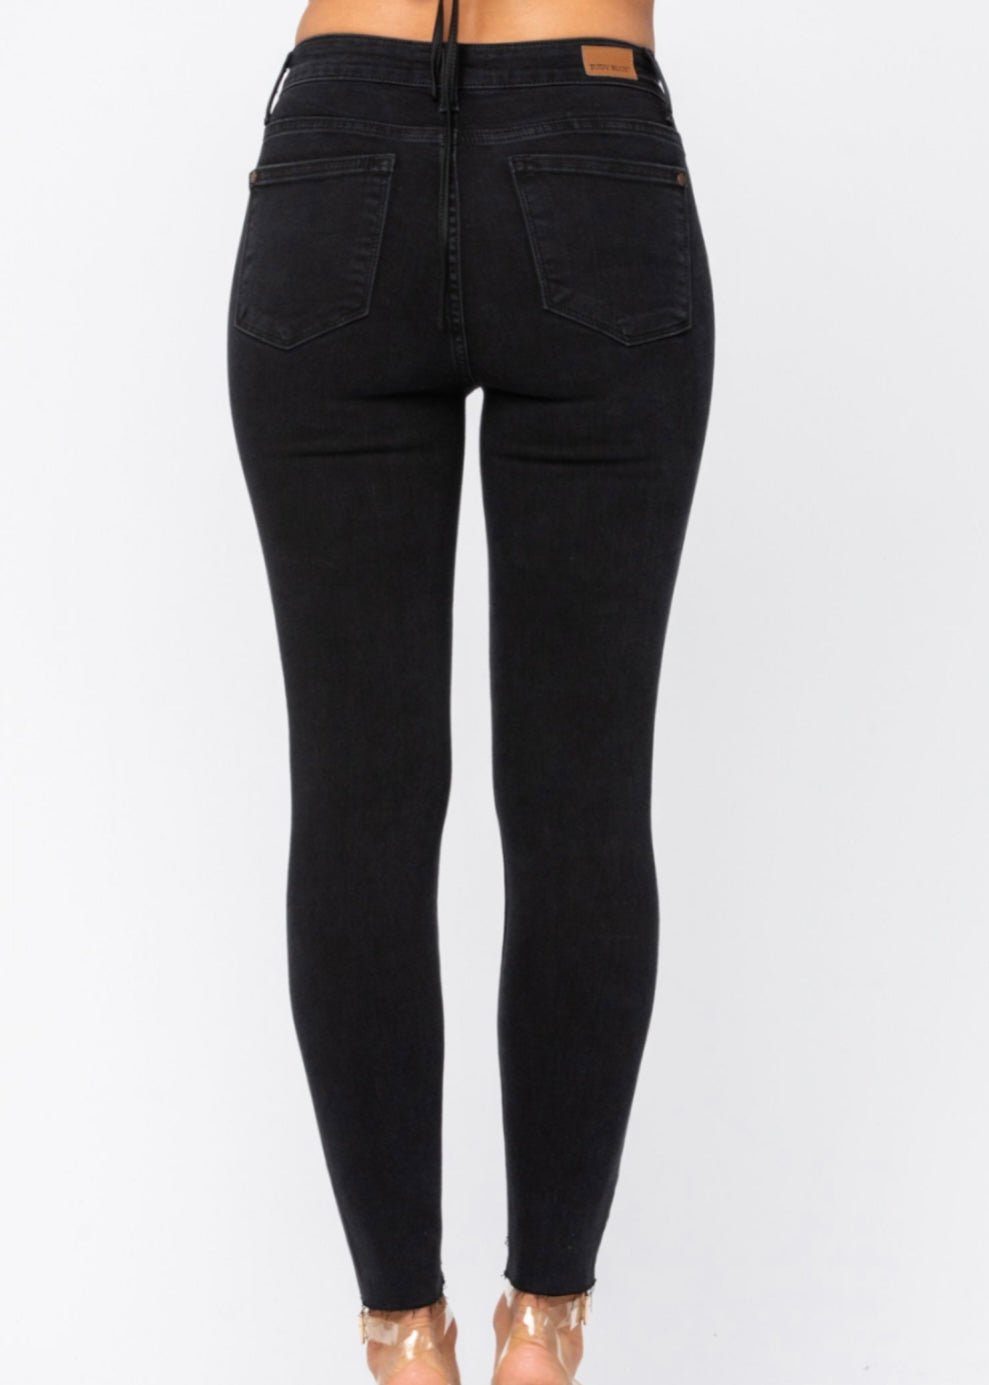 Judy Blue Karma Black Destroyed Leopard Patch Skinny Jeans - jeans - Jimberly's Boutique